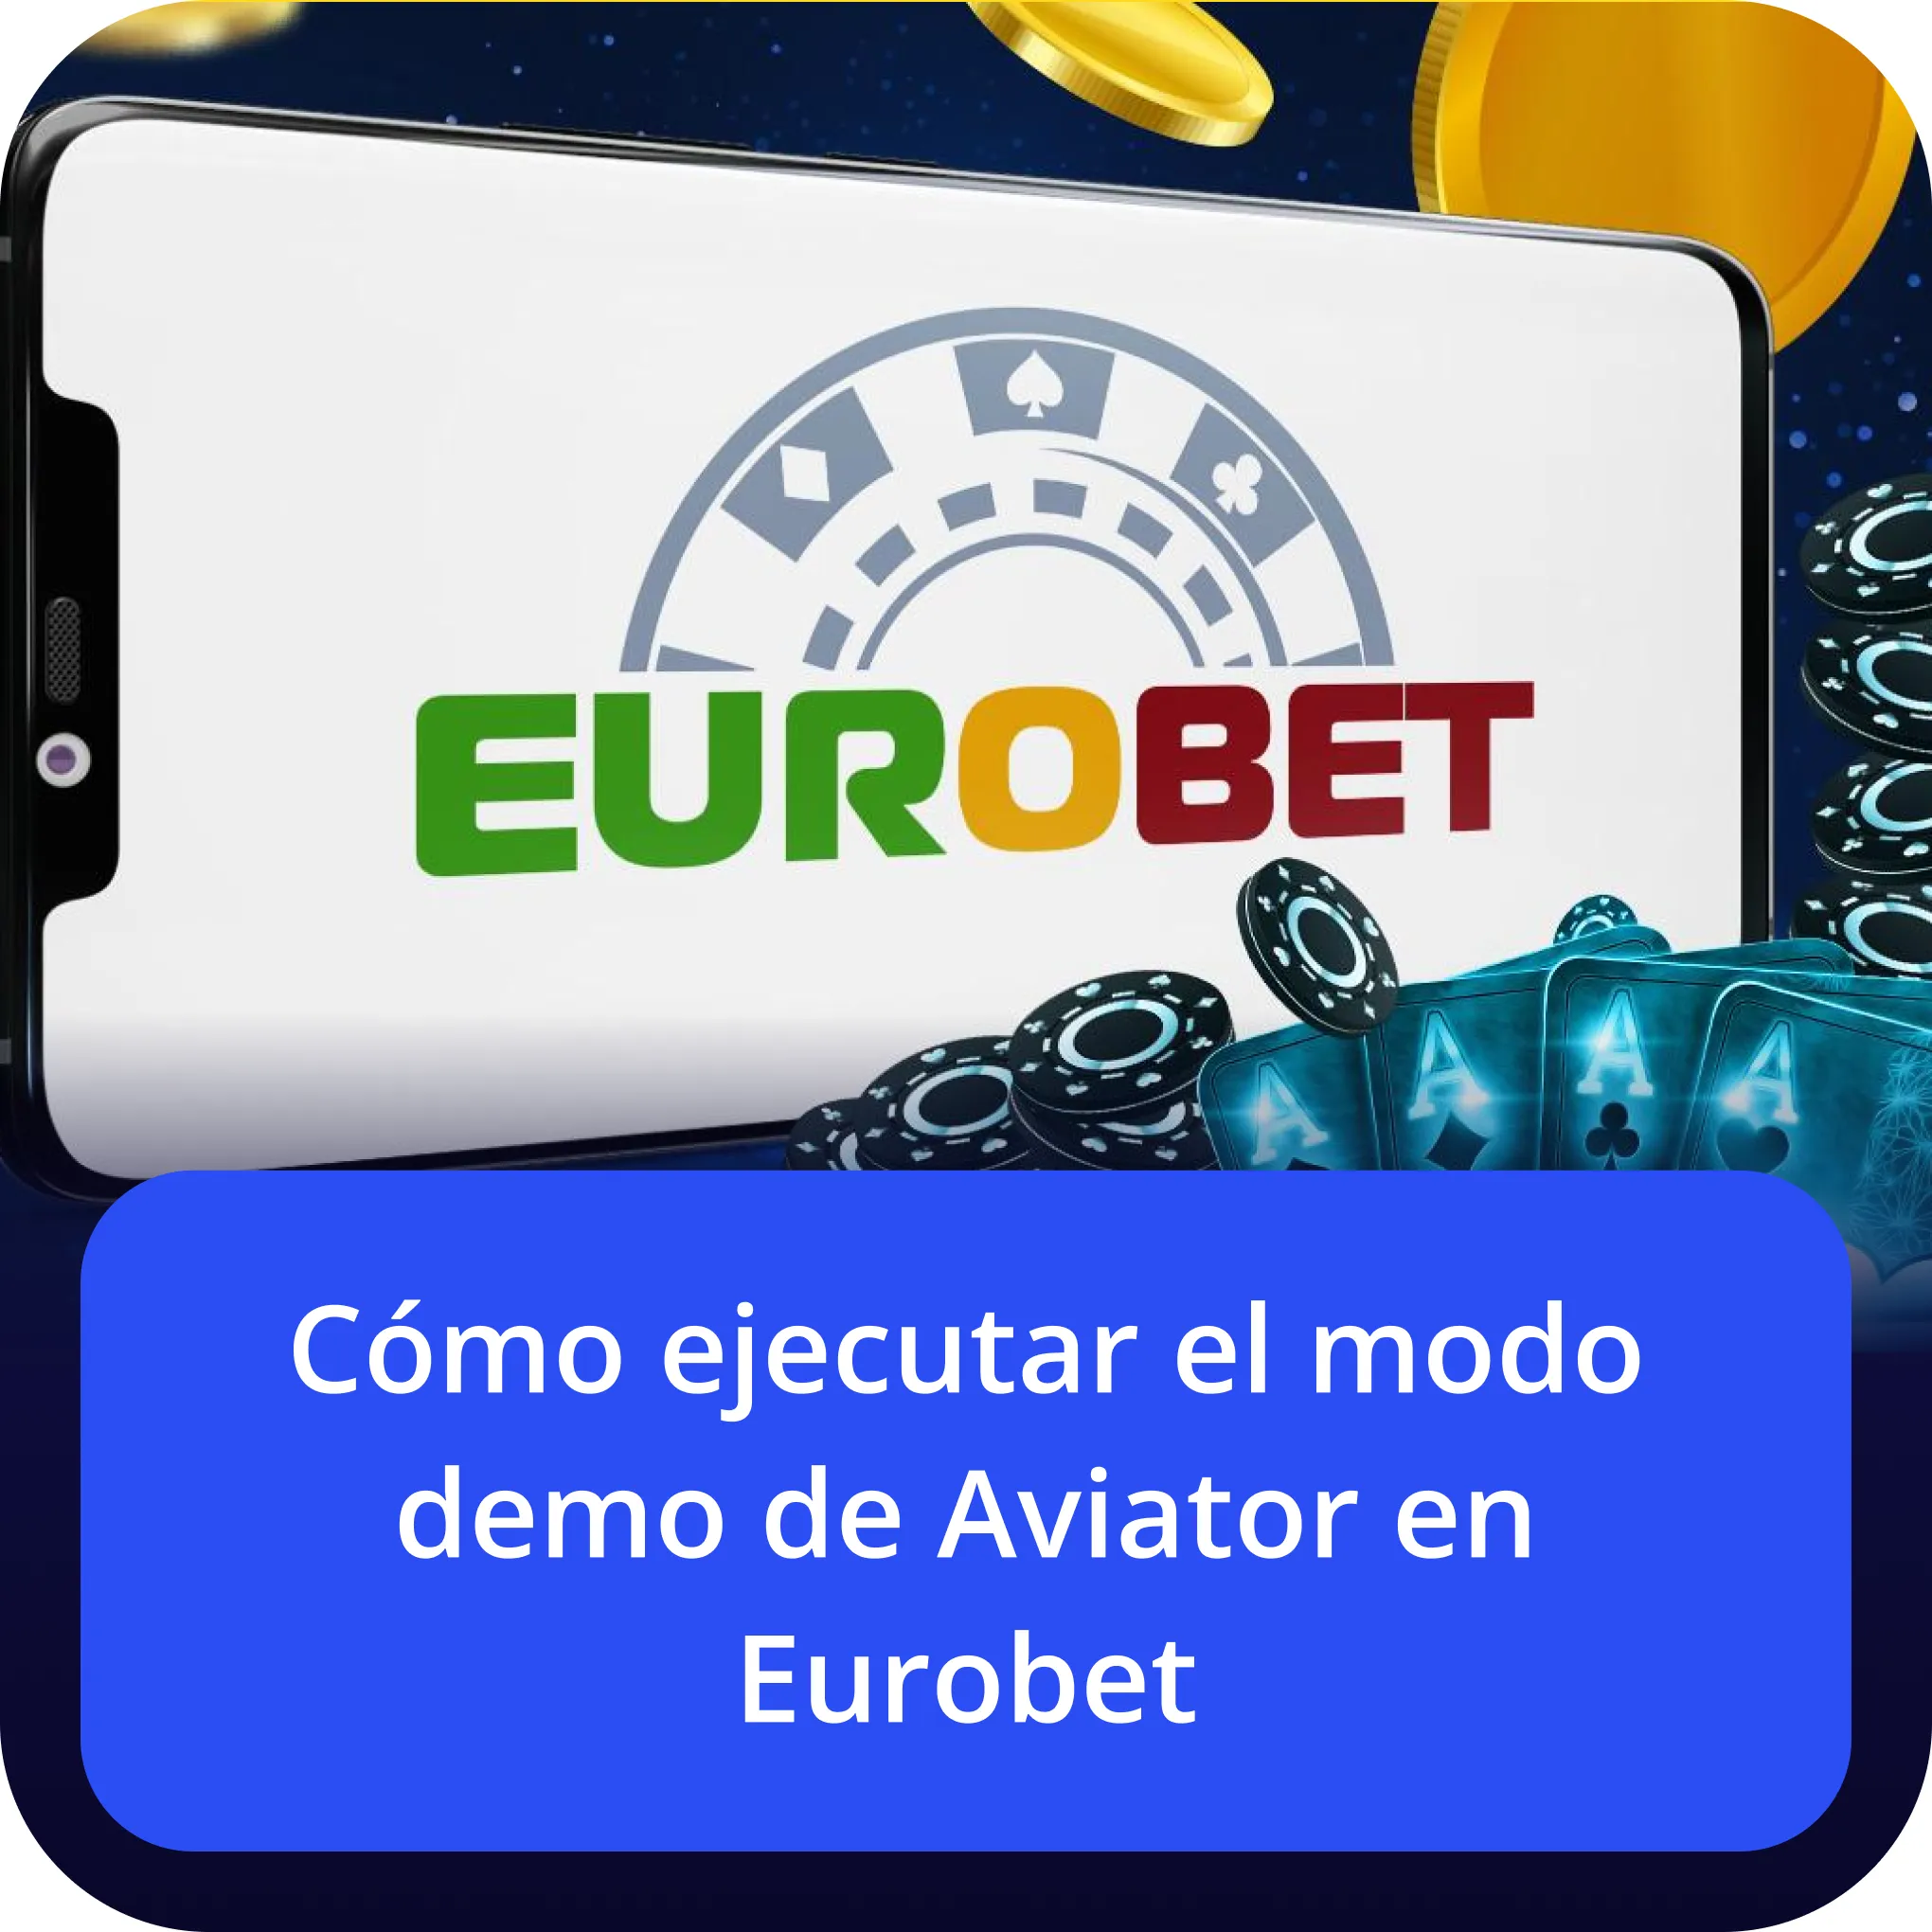 eurobet aviator versión de demostración